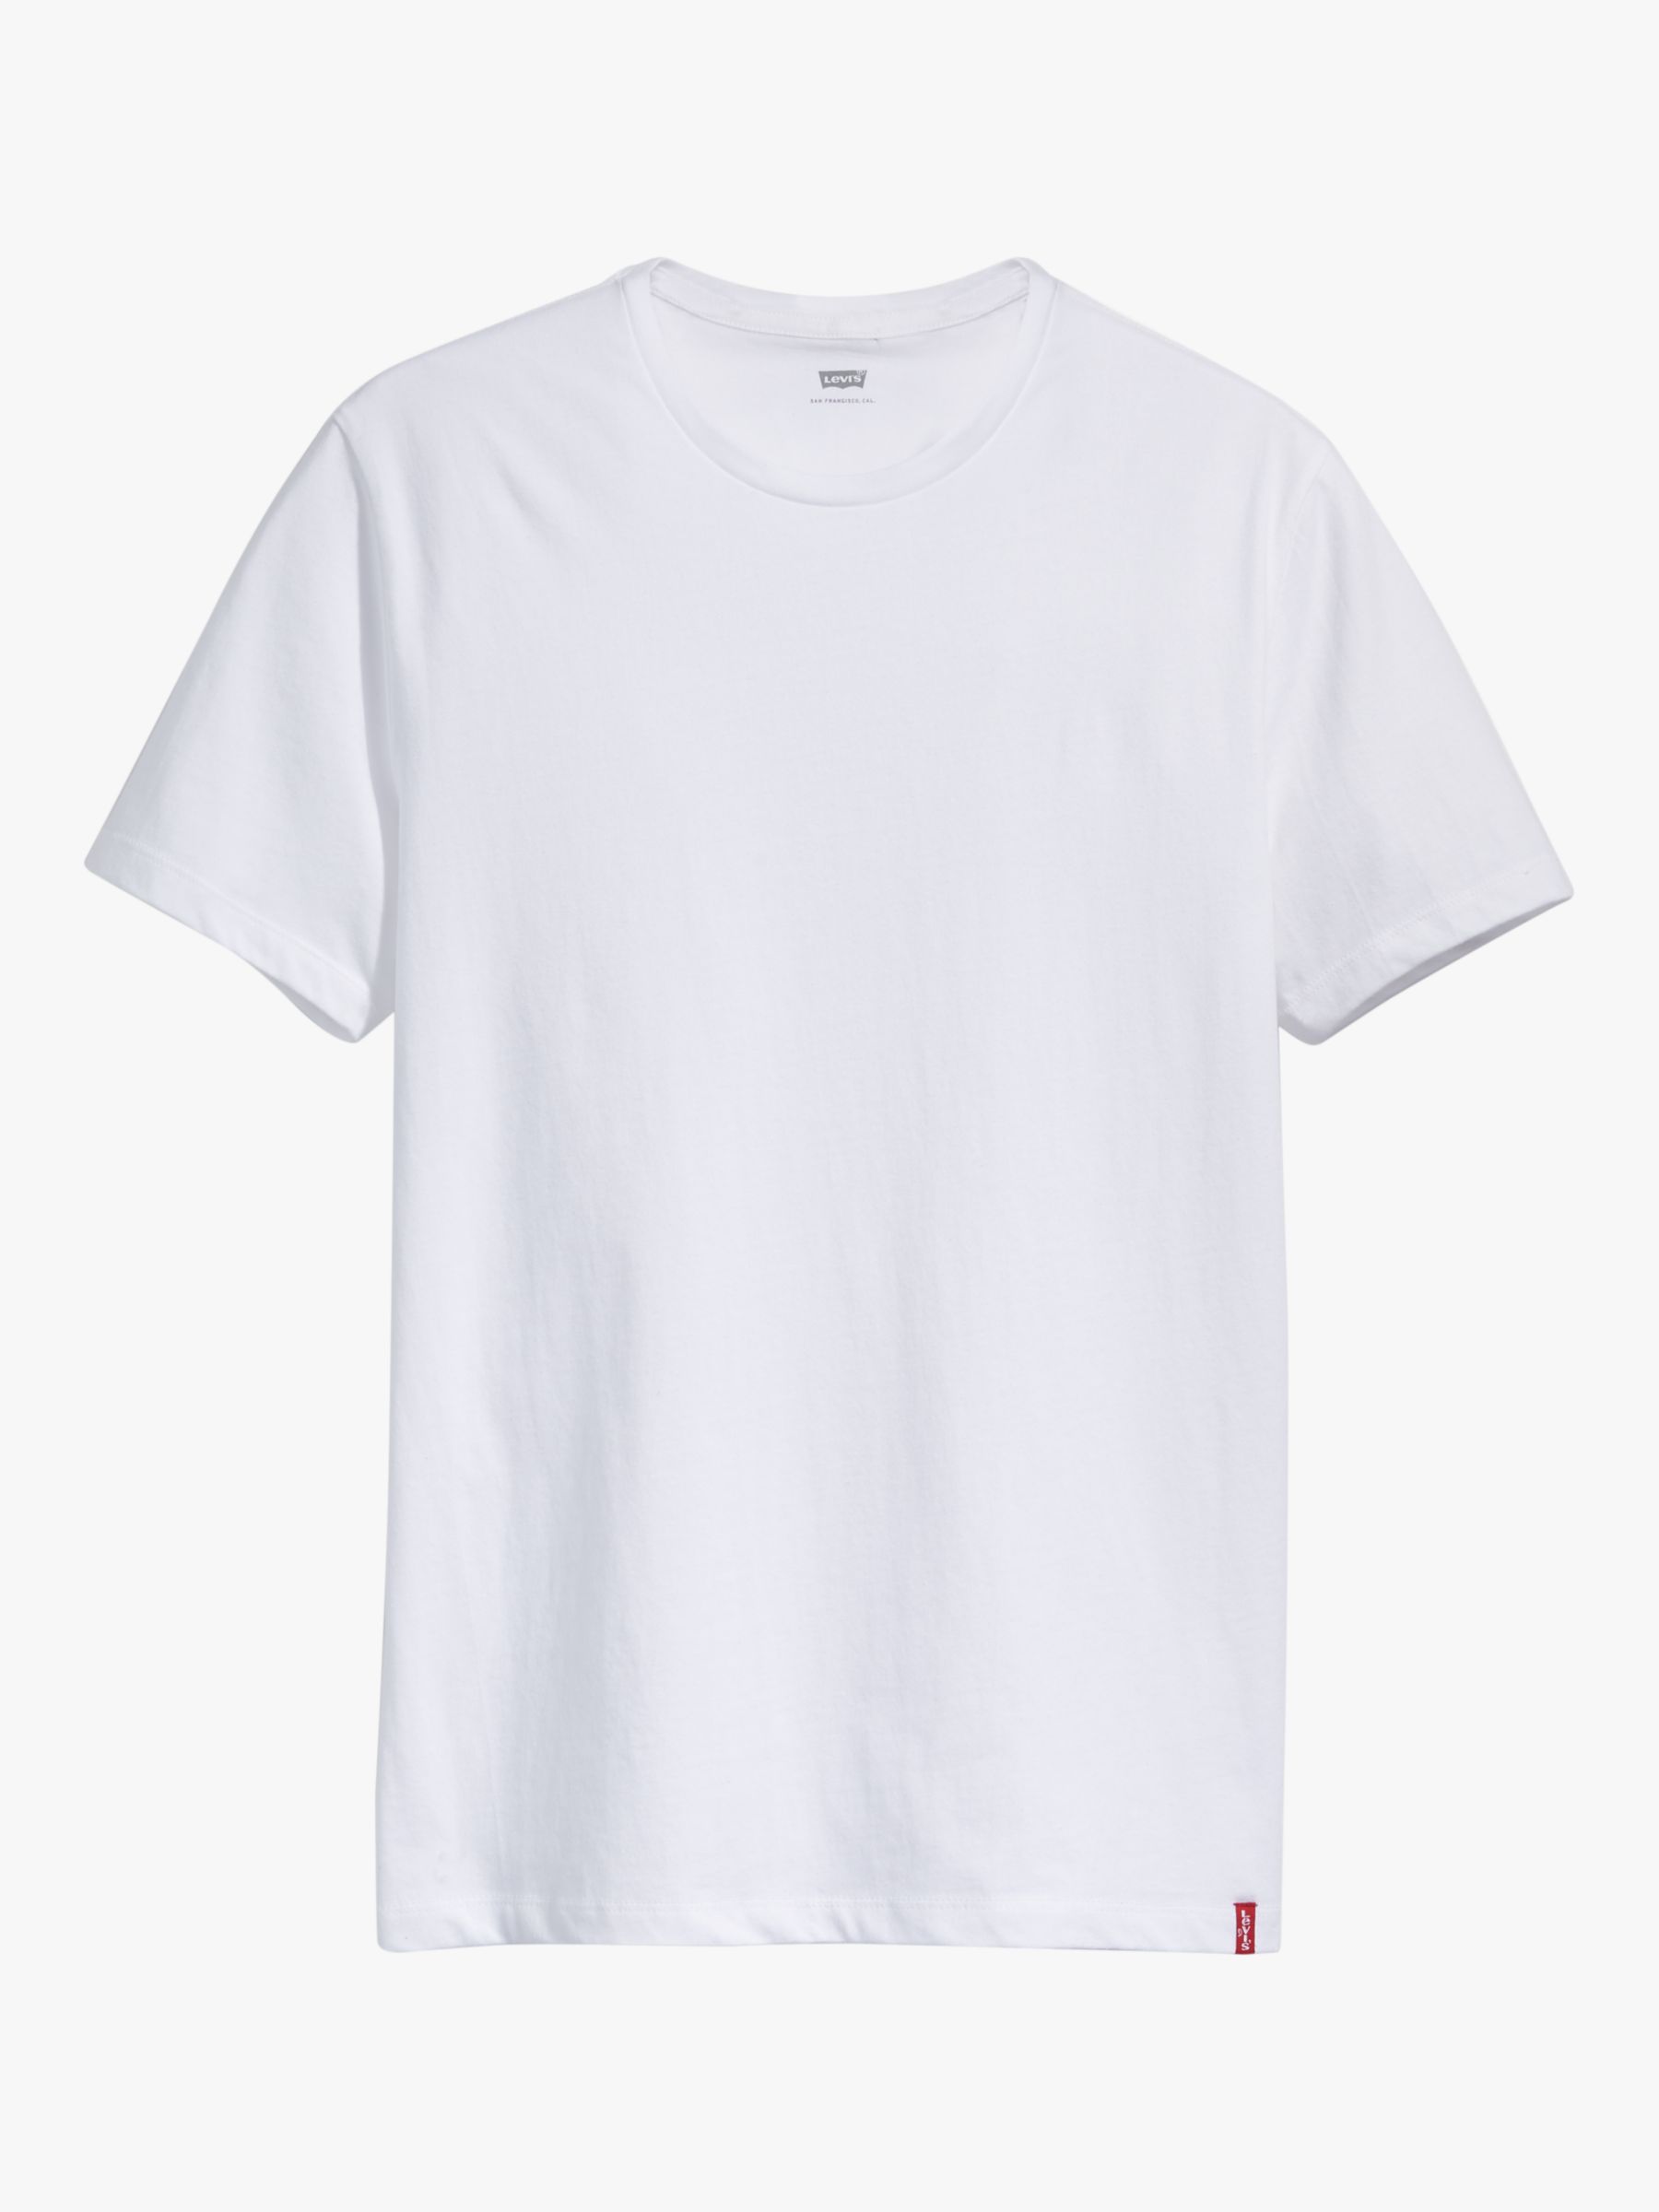 Levi's Cotton Slim Fit Crew Neck T-Shirt, Pack of 2, Blue/White, XS